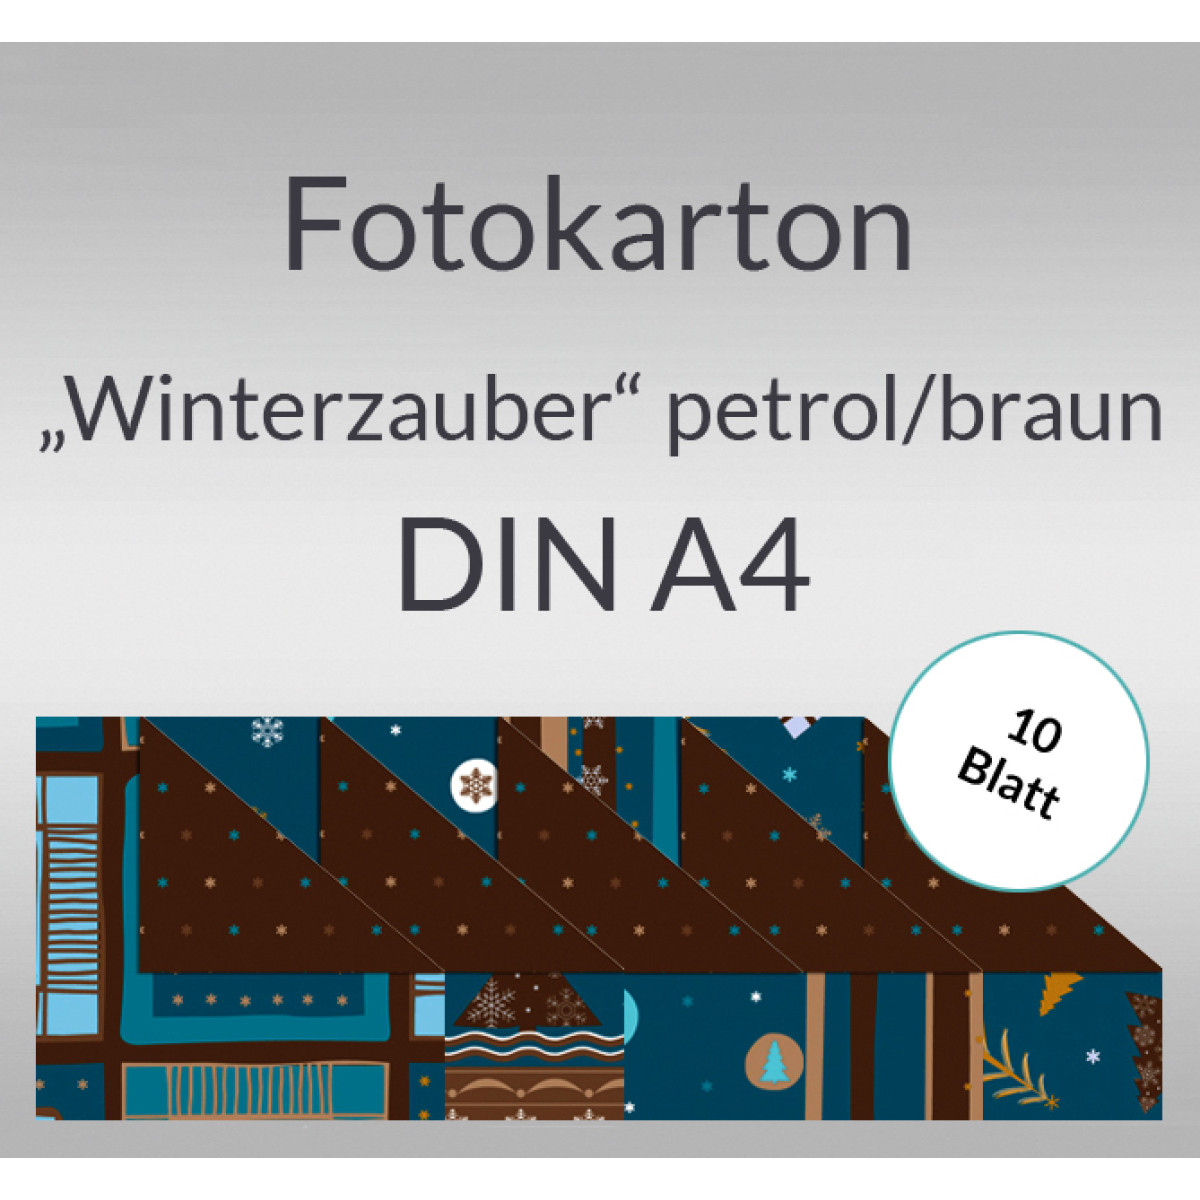 Fotokarton "Winterzauber" petrol/braun DIN A4 - 10 Blatt